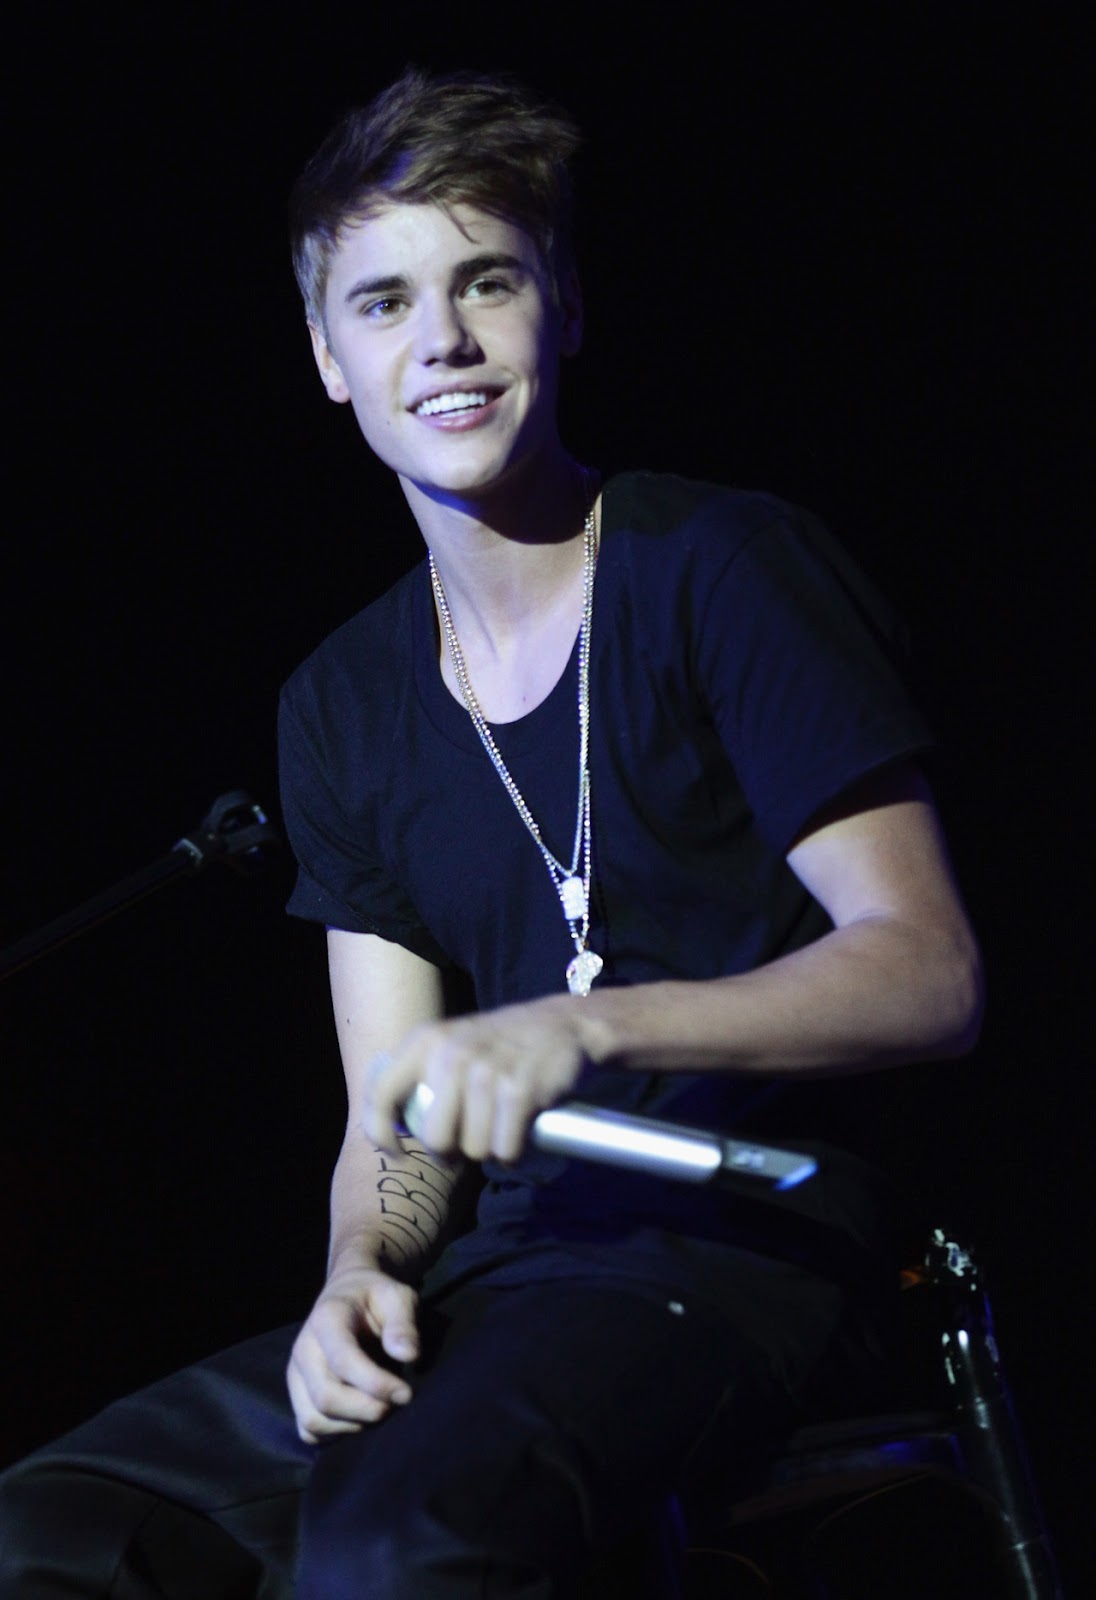 Justin Bieber News: Justin Bieber performing in Milan (Photos HQ)